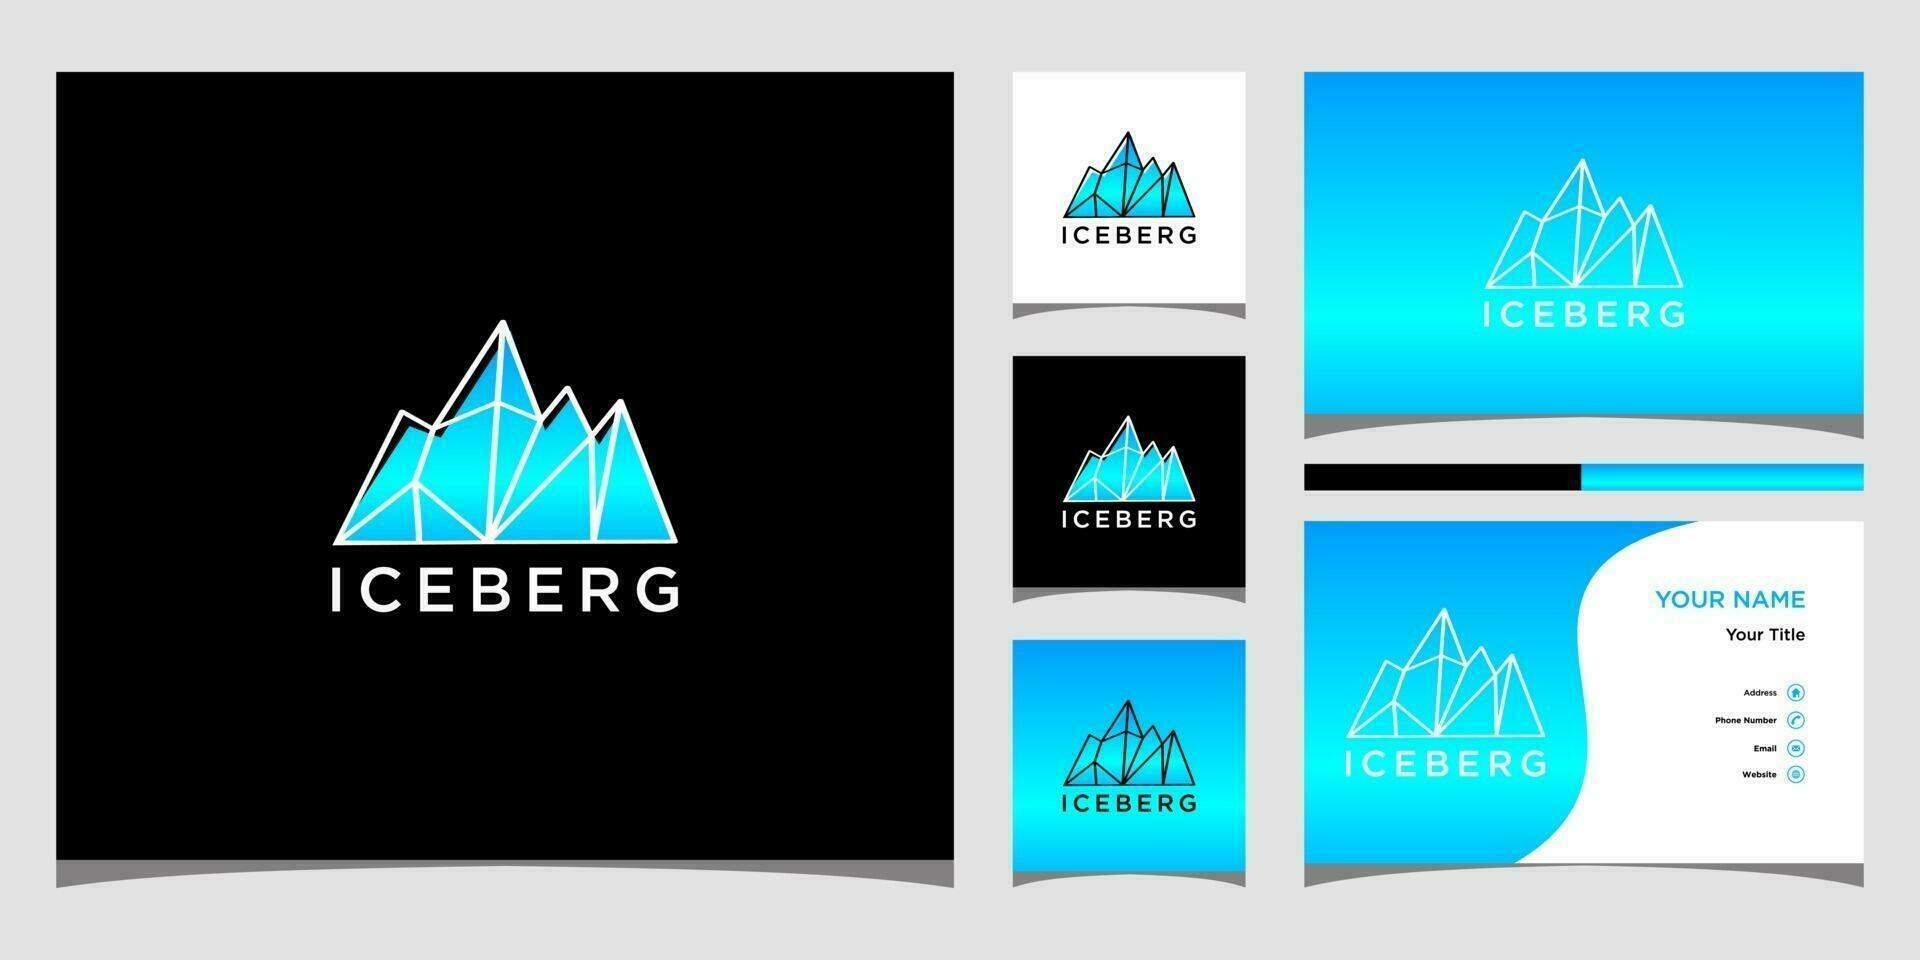 Iceberg logo templates and business card design Premium Vector